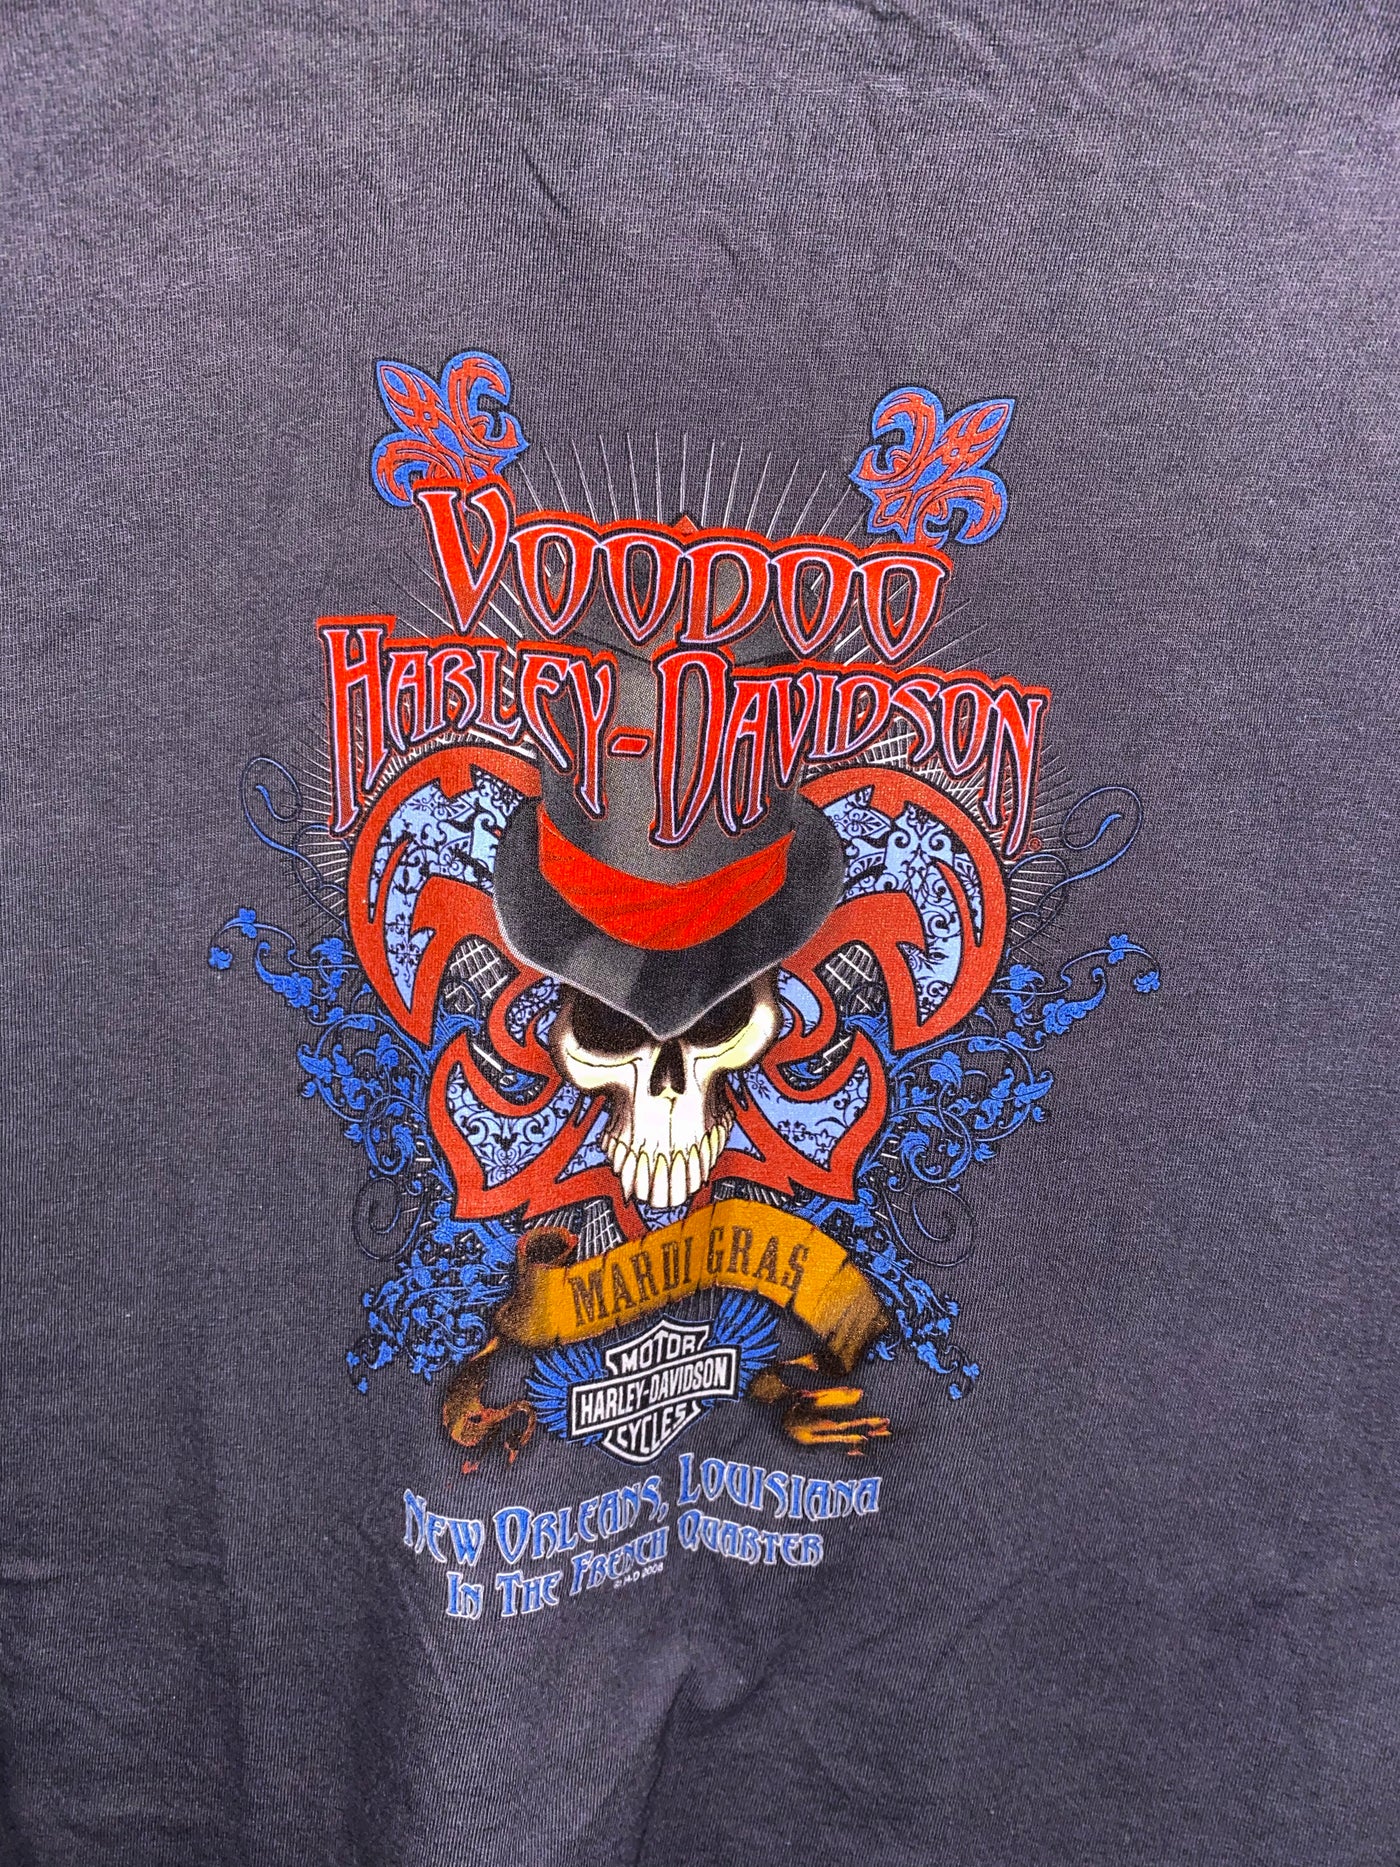 2008 Harley Davidson VooDoo T-Shirt